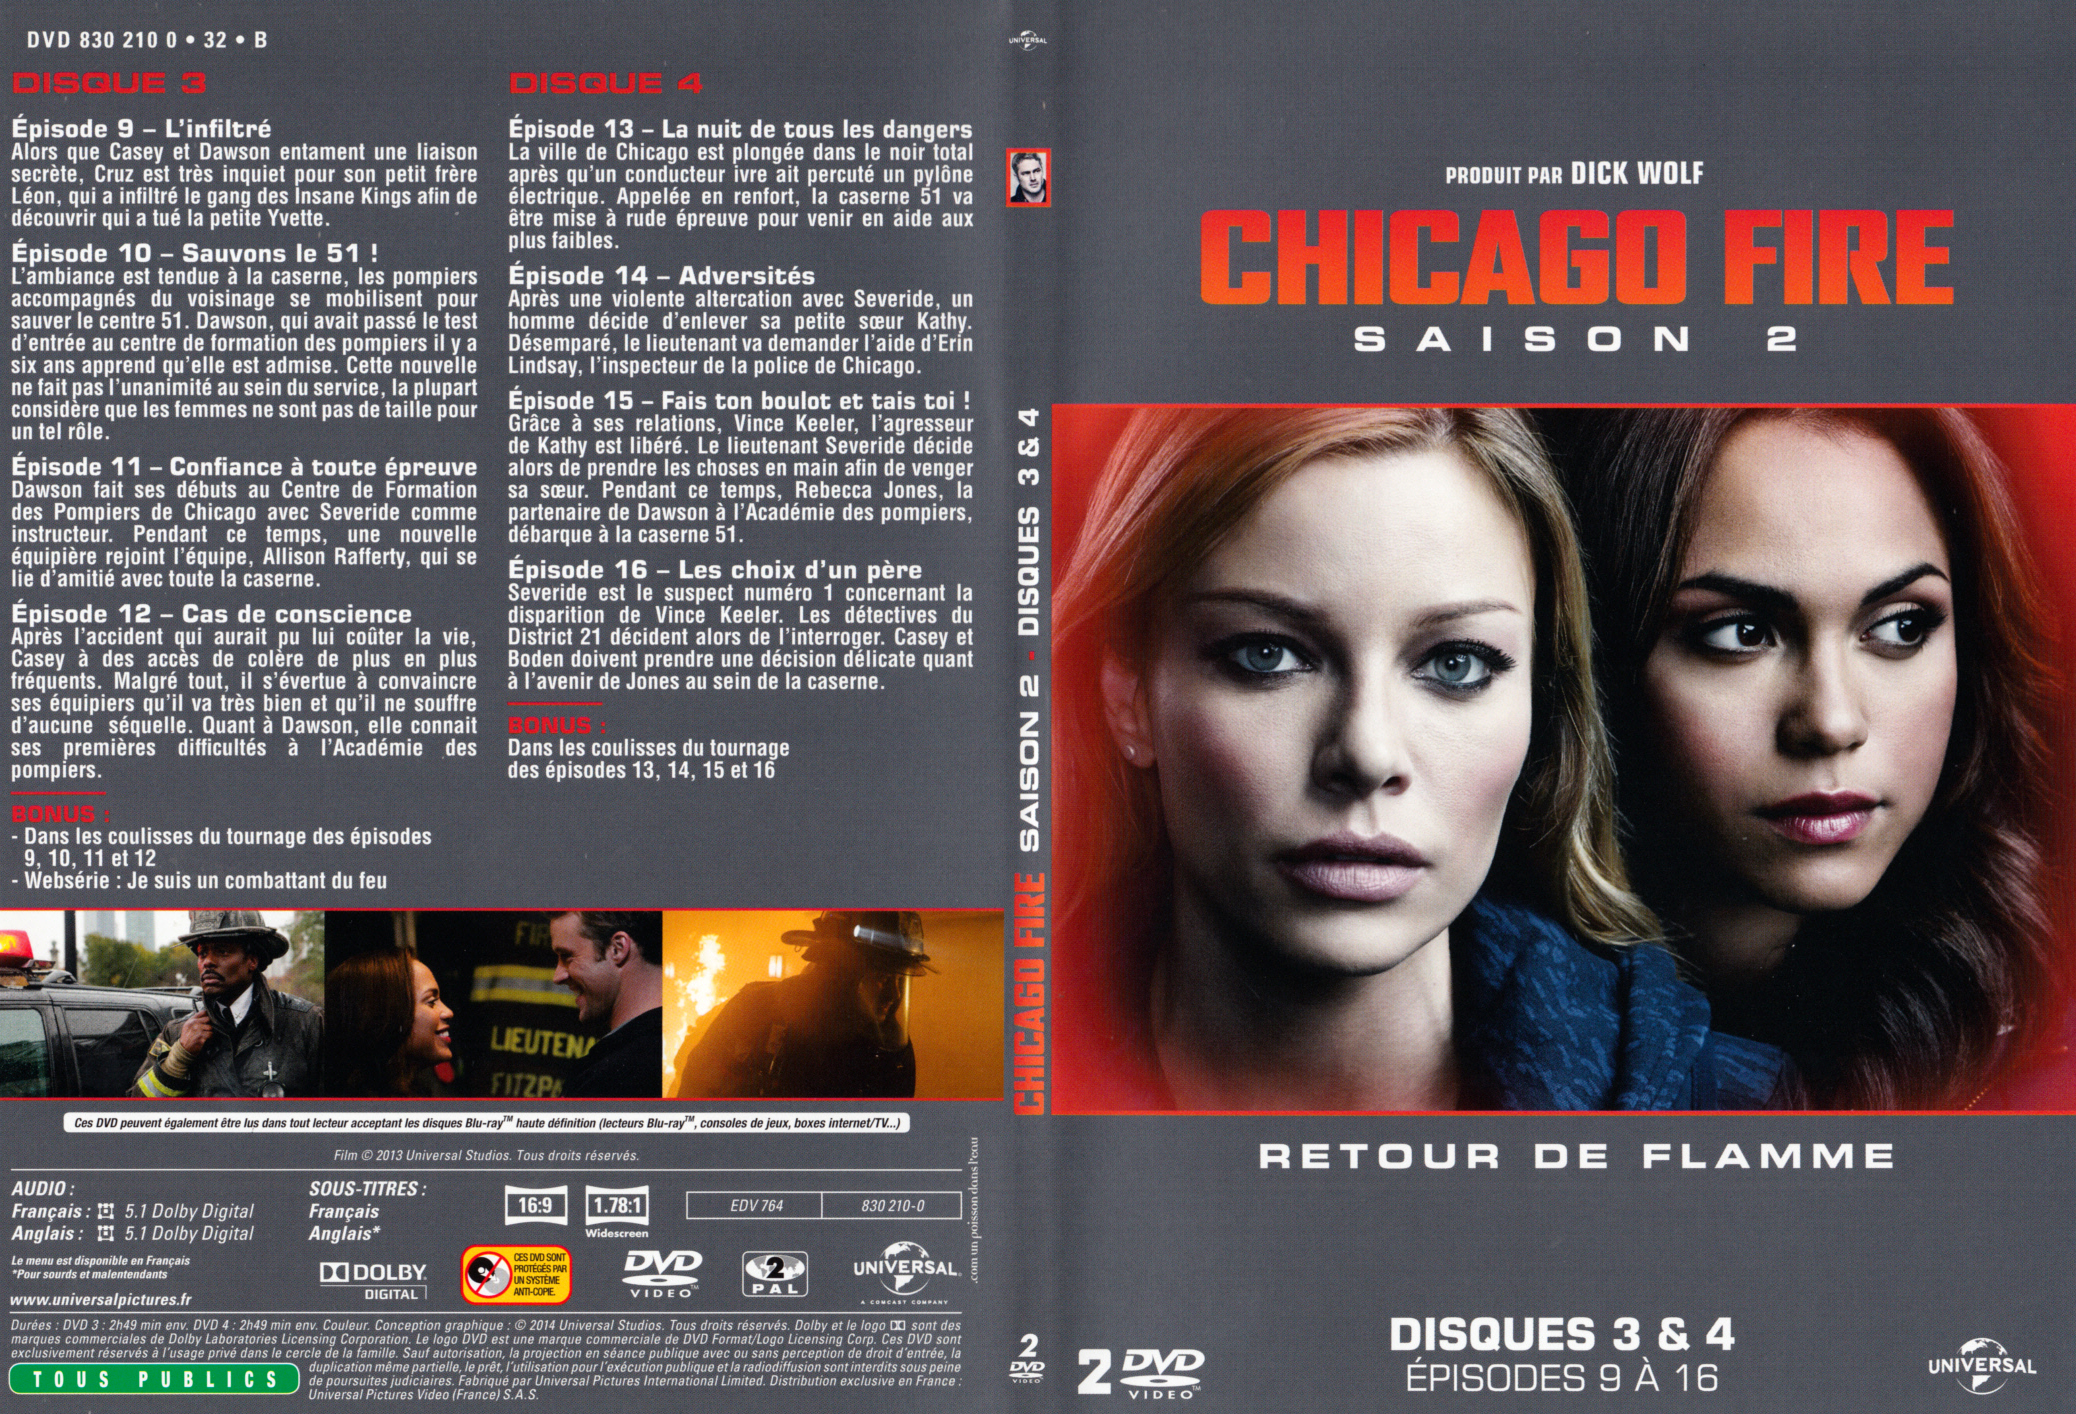 Jaquette DVD Chicago Fire Saison 2 DVD 2